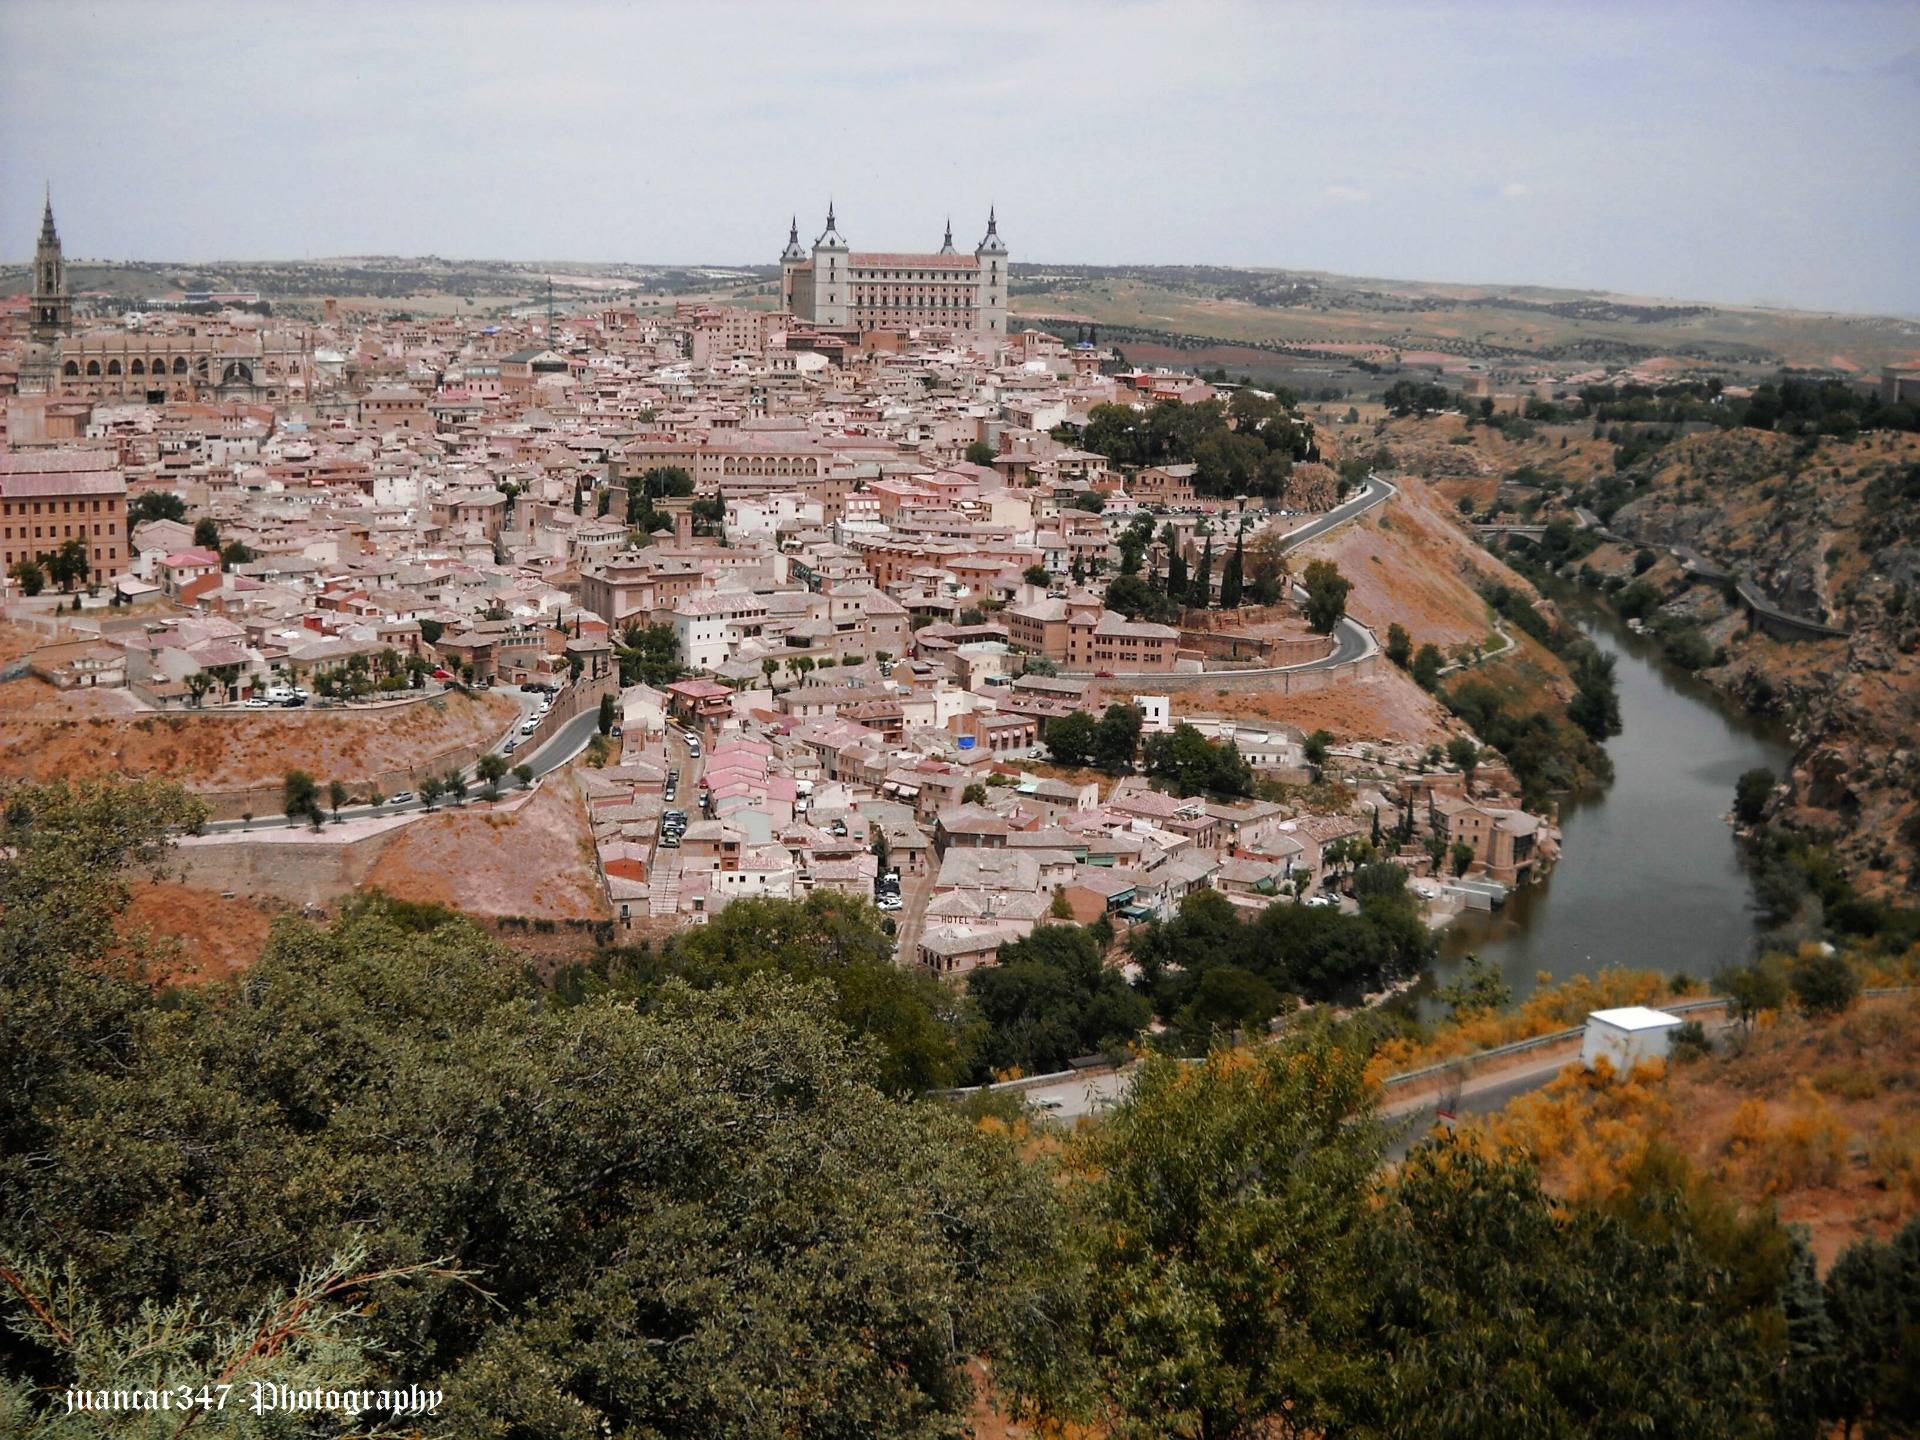 Toledo: a walk through the Imperial City